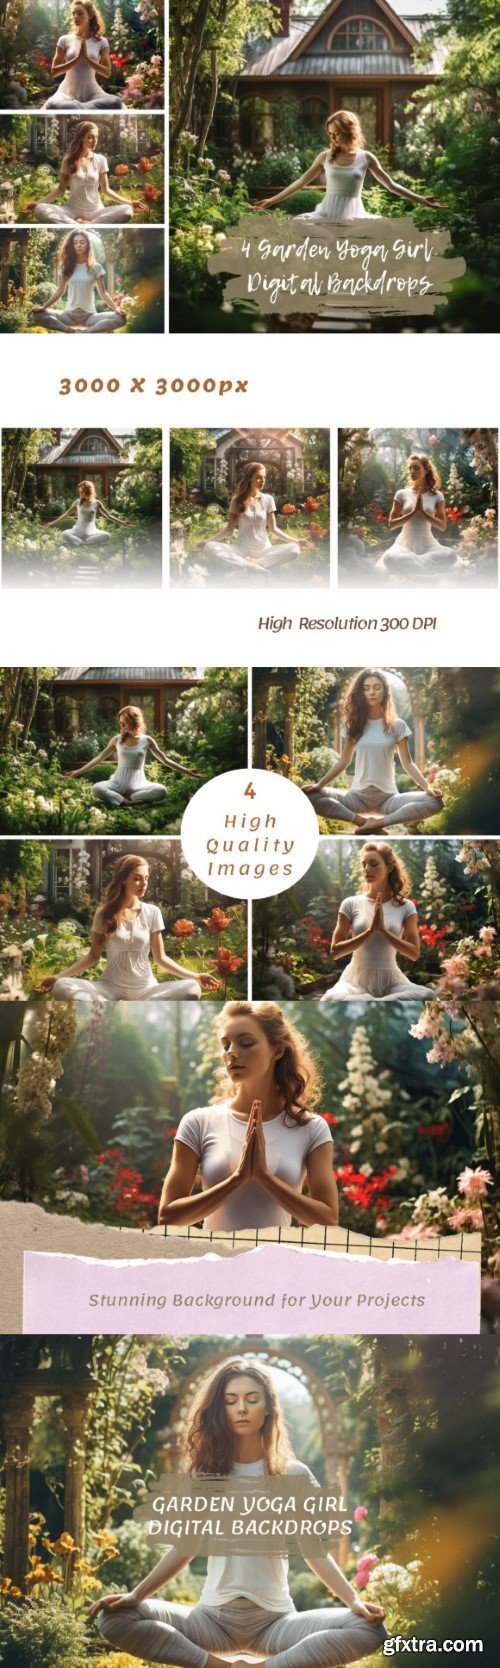 Garden Yoga Girl Digital Backdrops